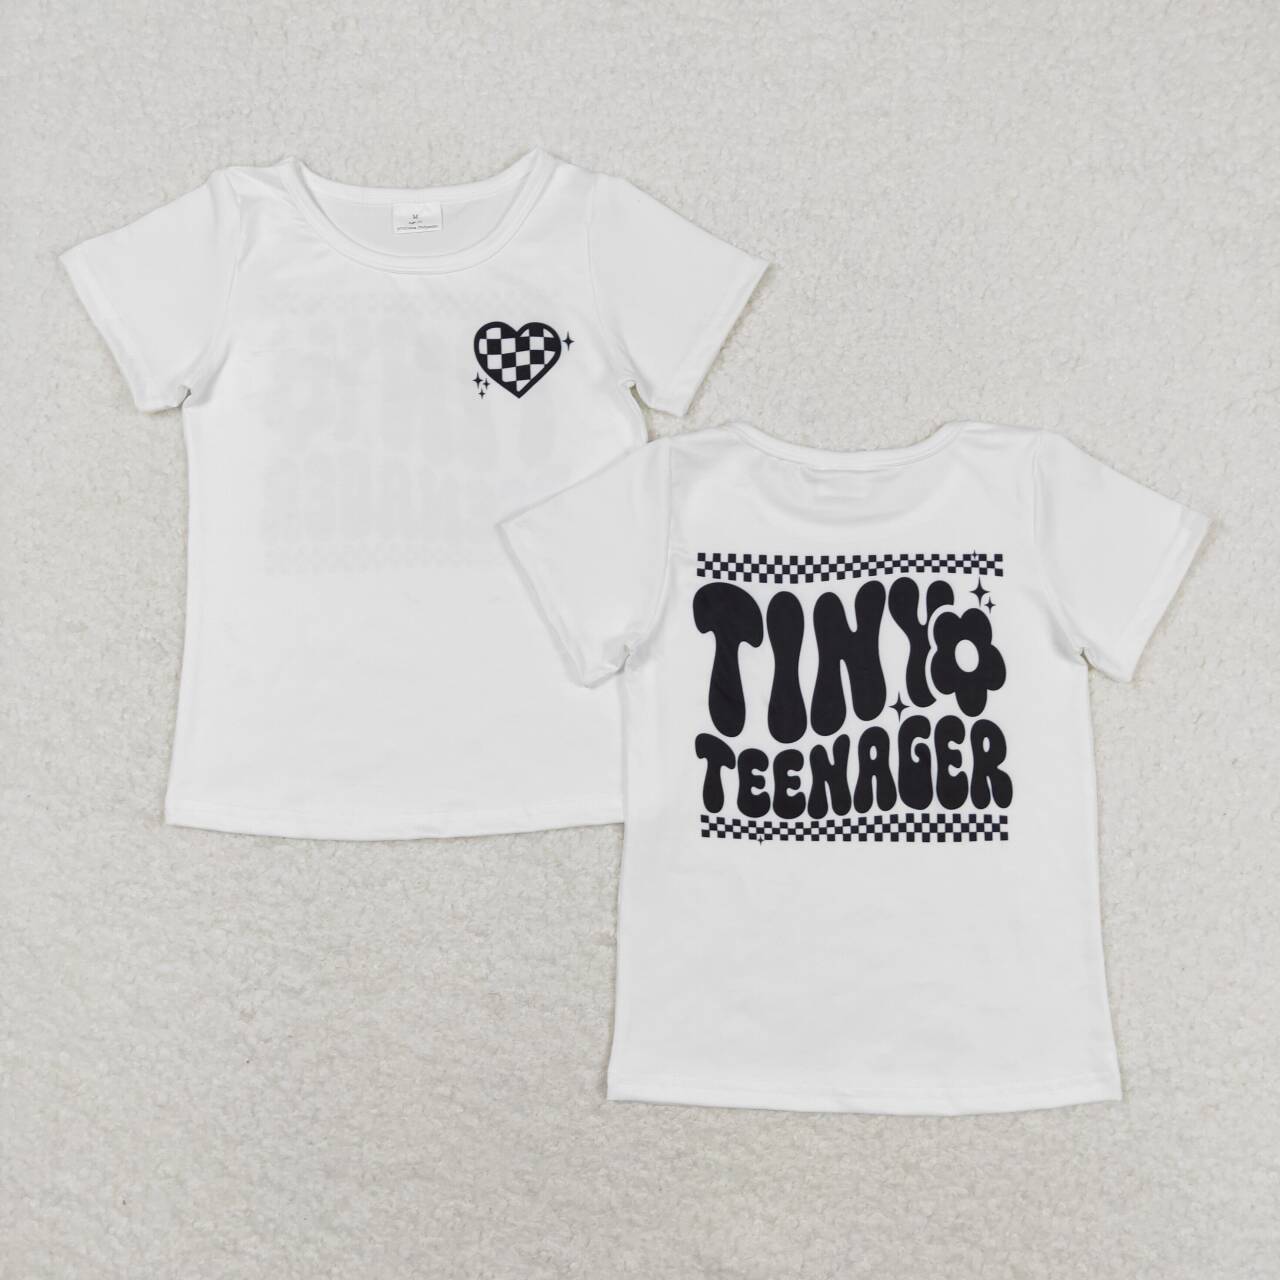 tiny teenager white t-shirt